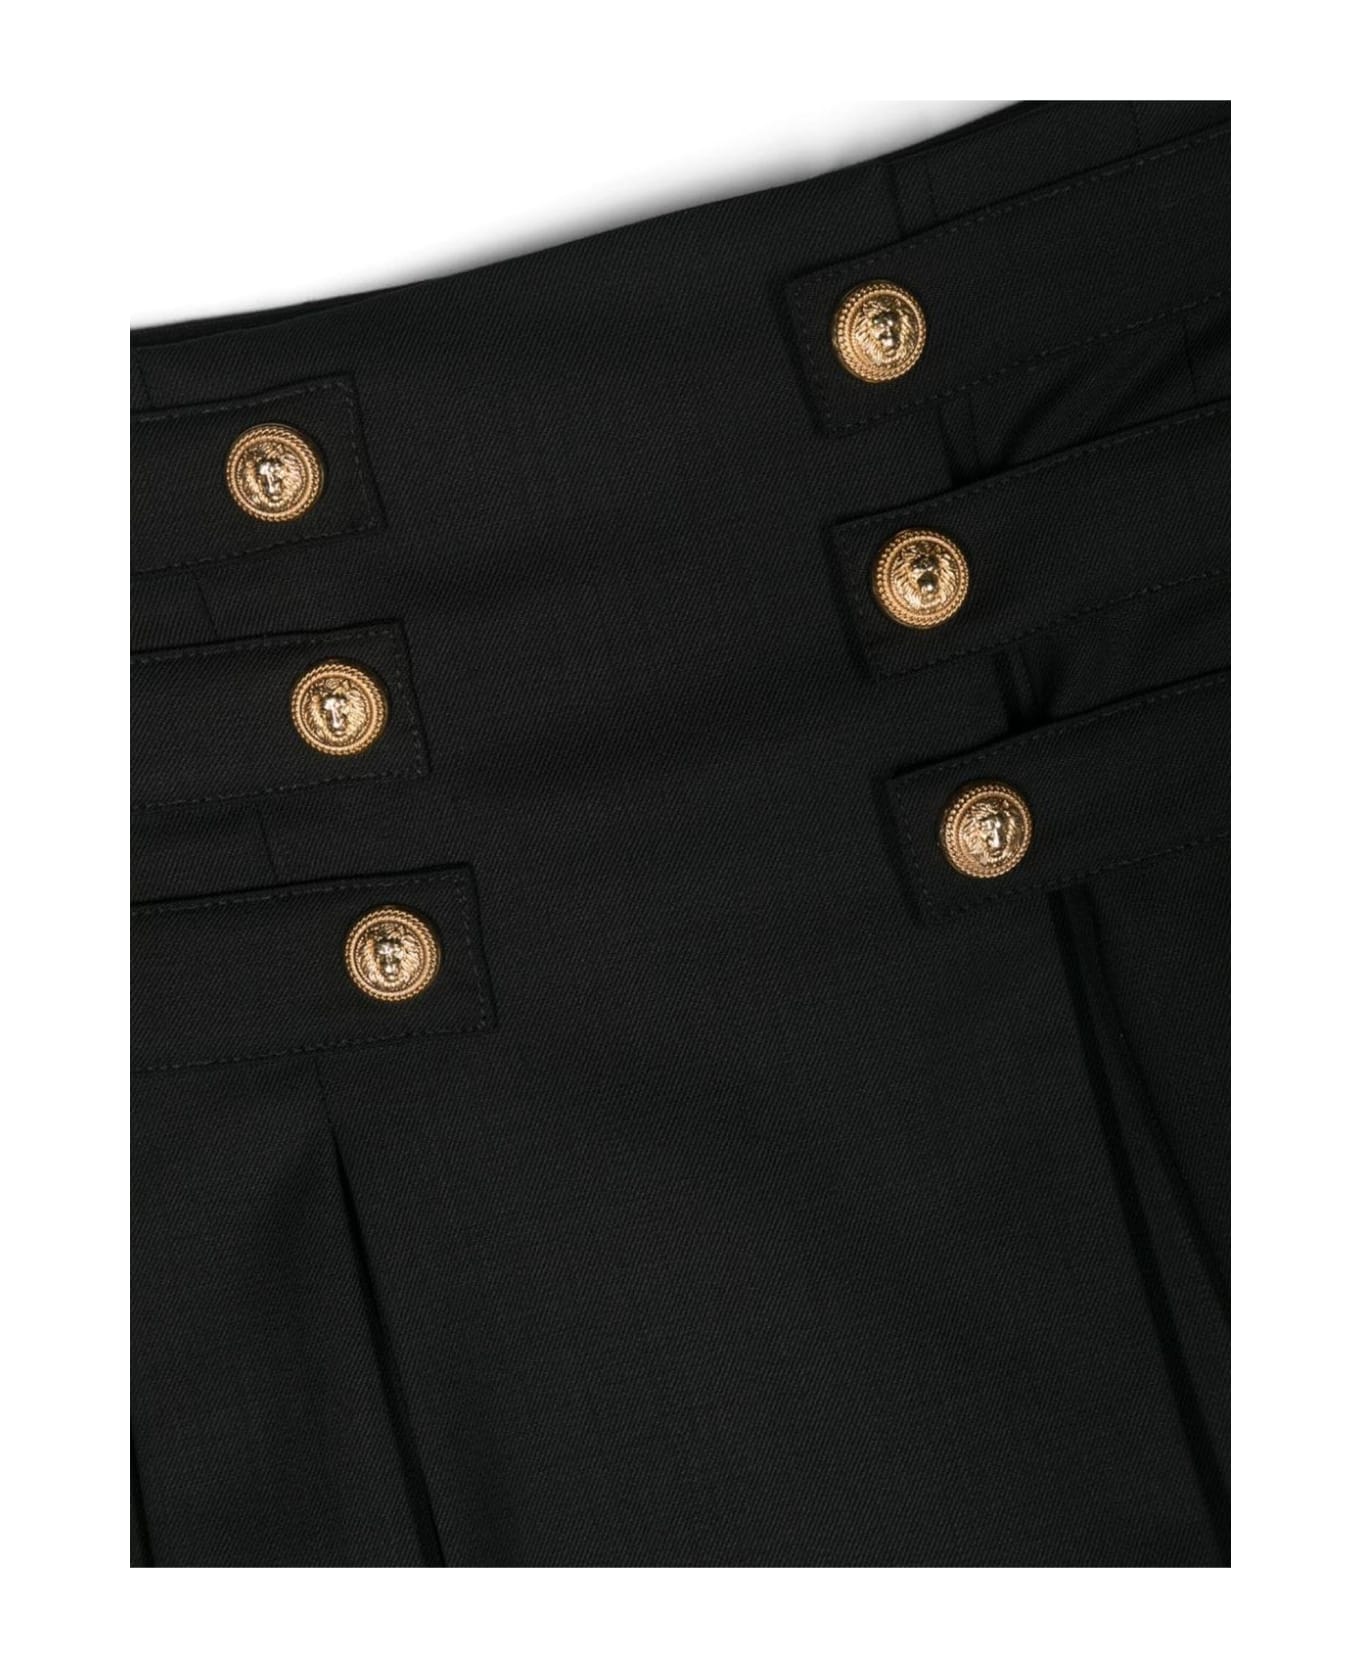 Balmain Skirts Black - Black